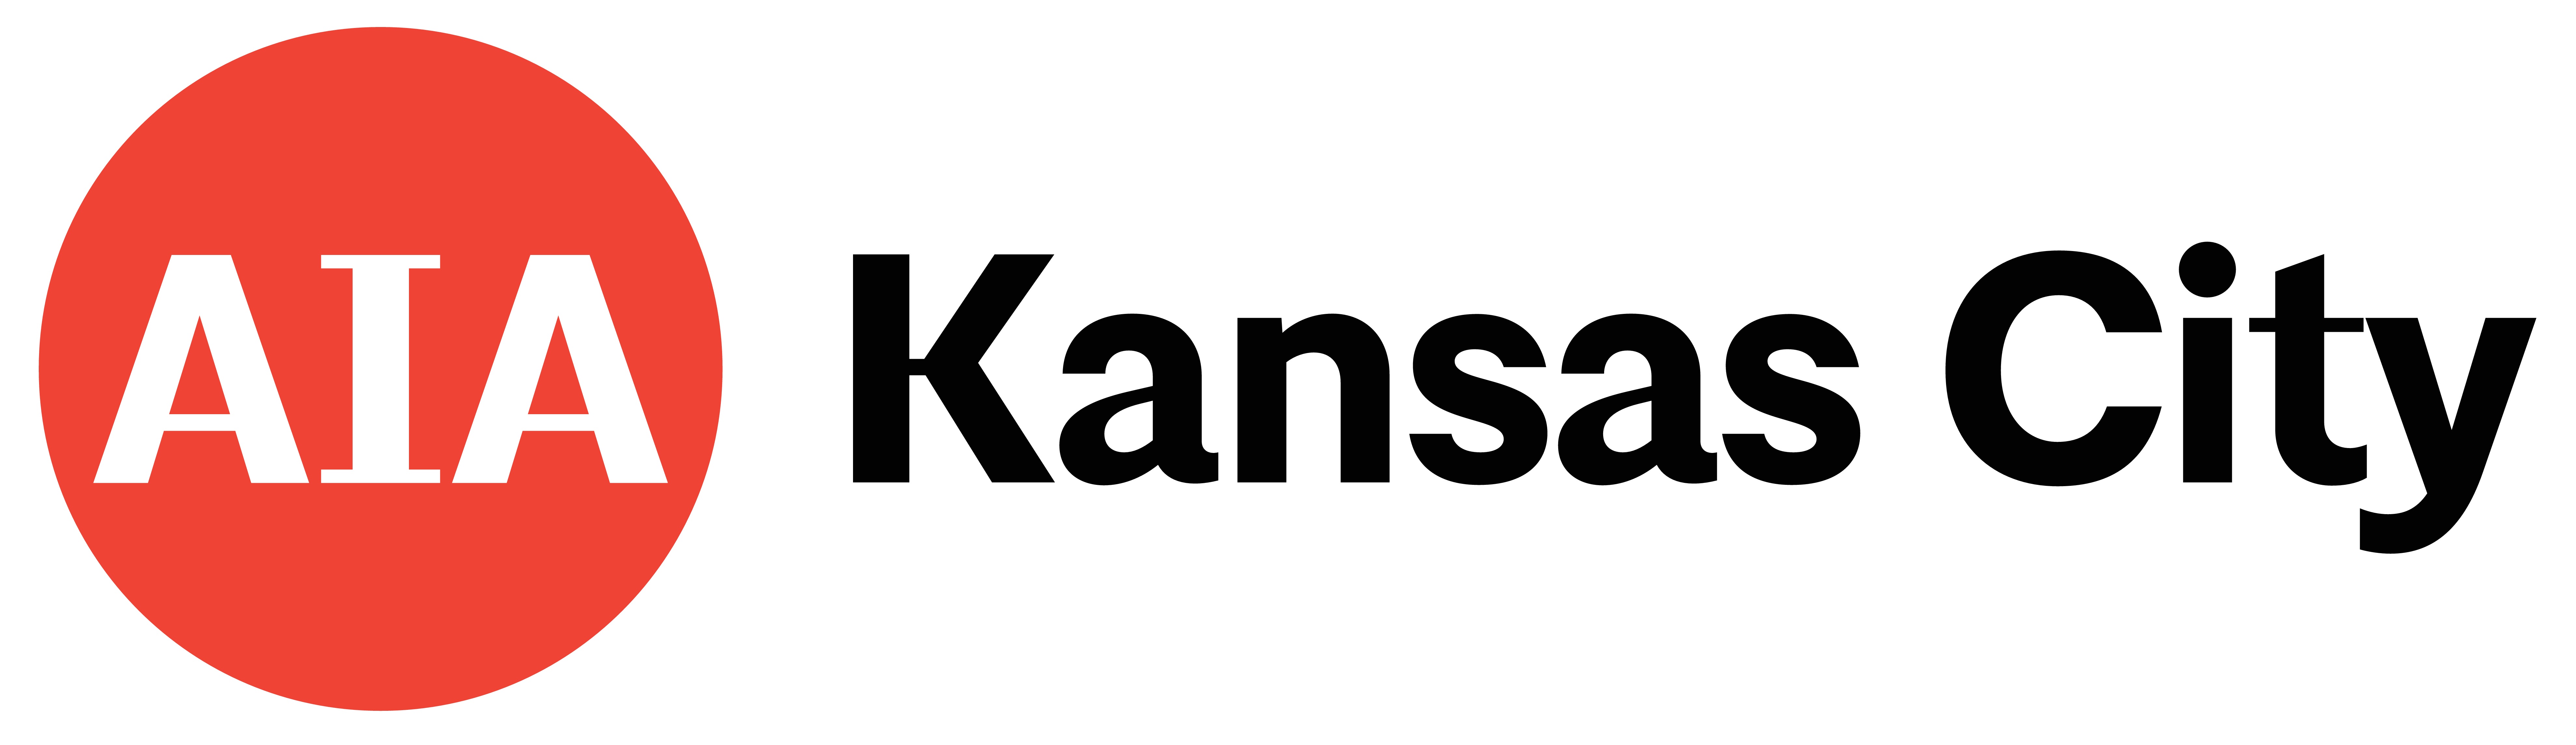 AIA-Kansas-City_RED-BLACK_RGB.jpg